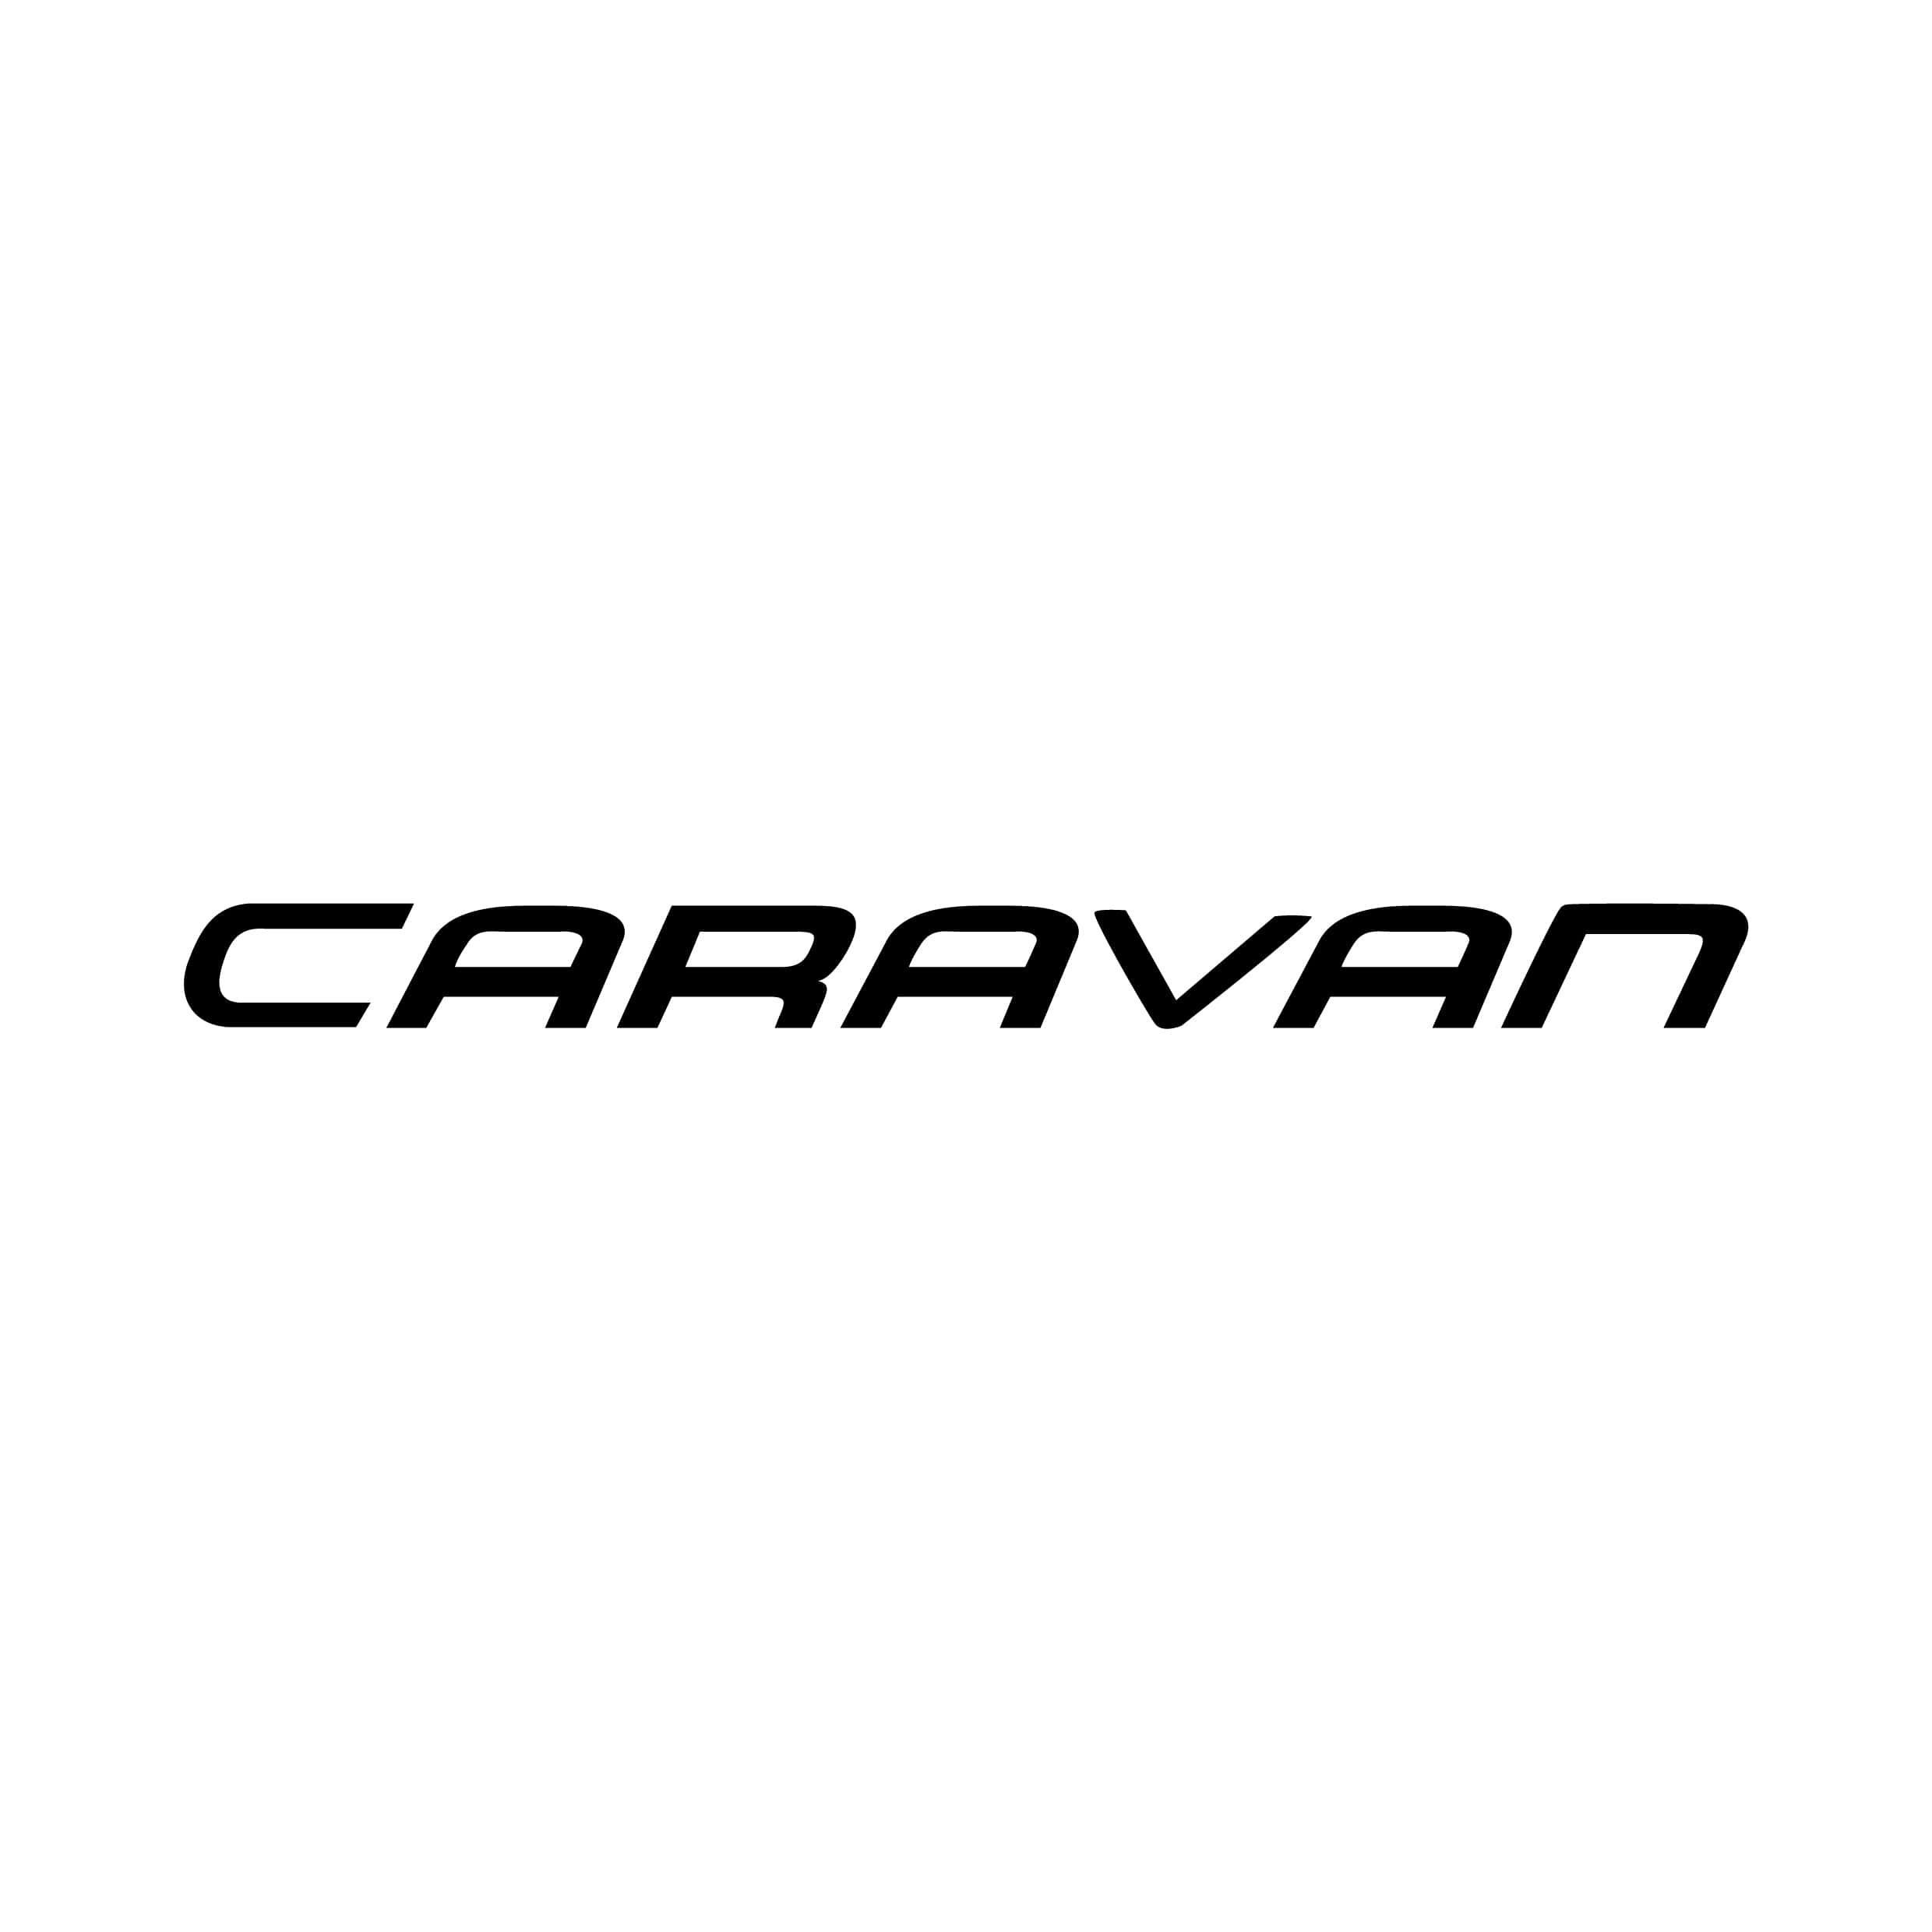 stickers-chrysler-caravan-ref28-autocollant-voiture-sticker-auto-autocollants-decals-sponsors-racing-tuning-sport-logo-min